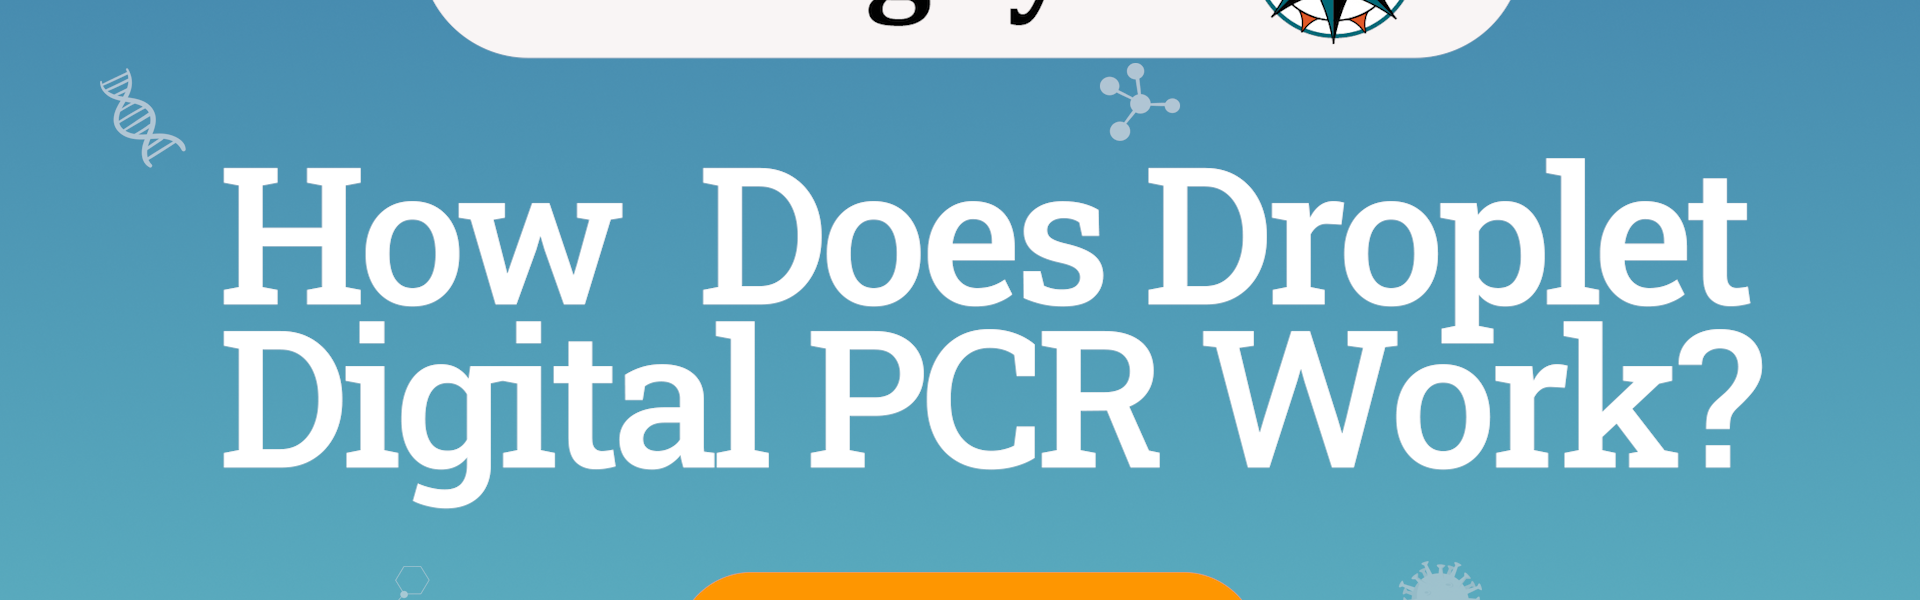 how does droplet digital pcr work